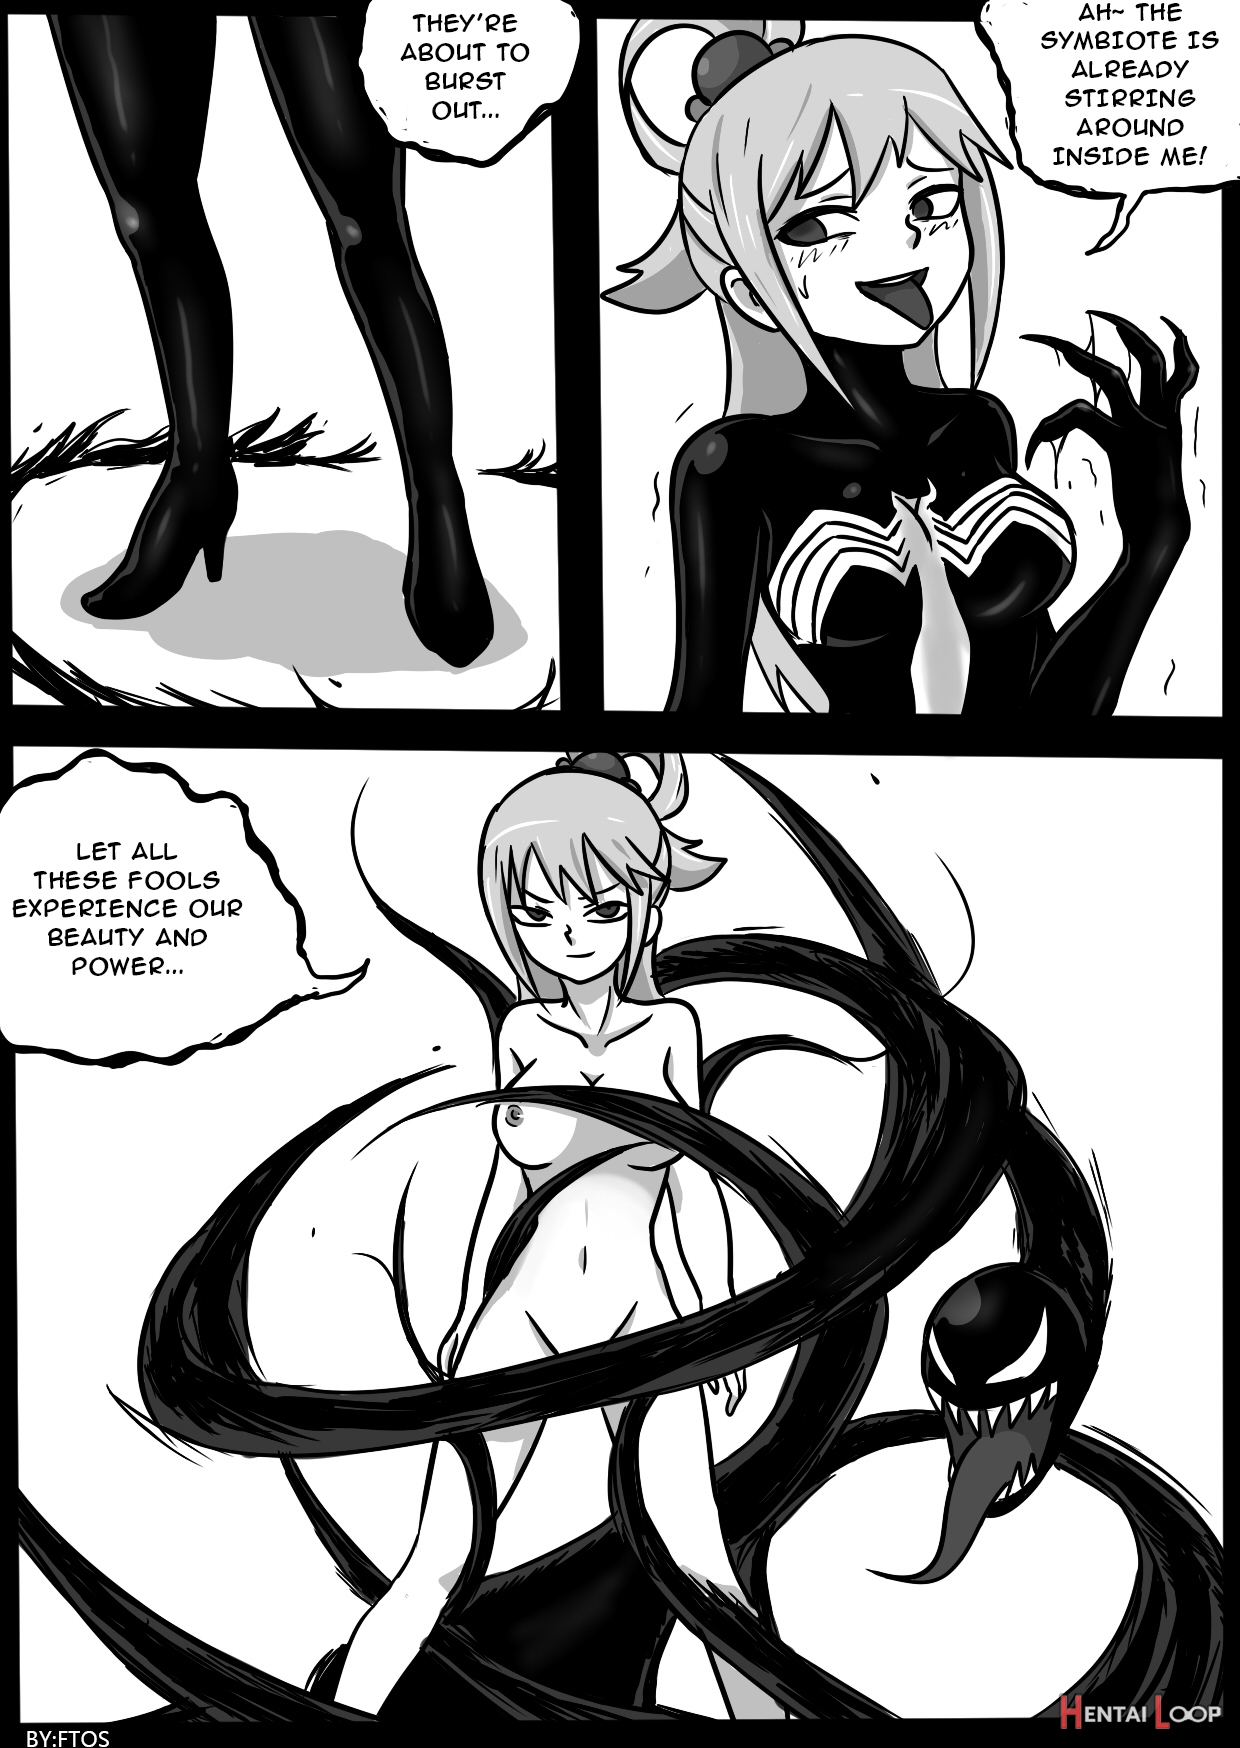 Spreading Venom On This Wonderful World page 37